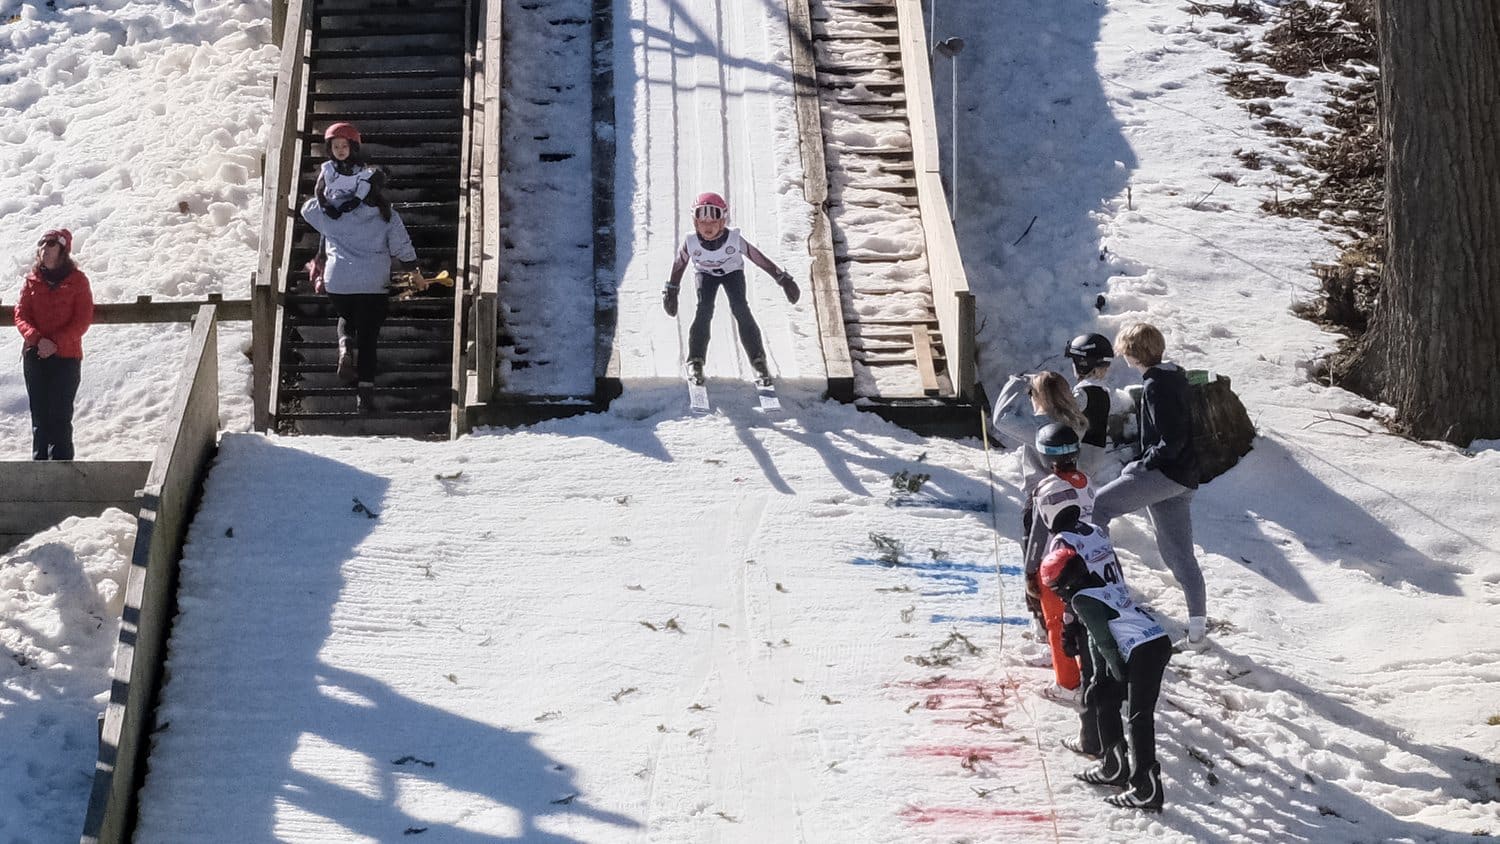 Kinsley Pankratz of Norge Ski Club at the 118th annual Norge Ski Club, winter tournament, 2023.